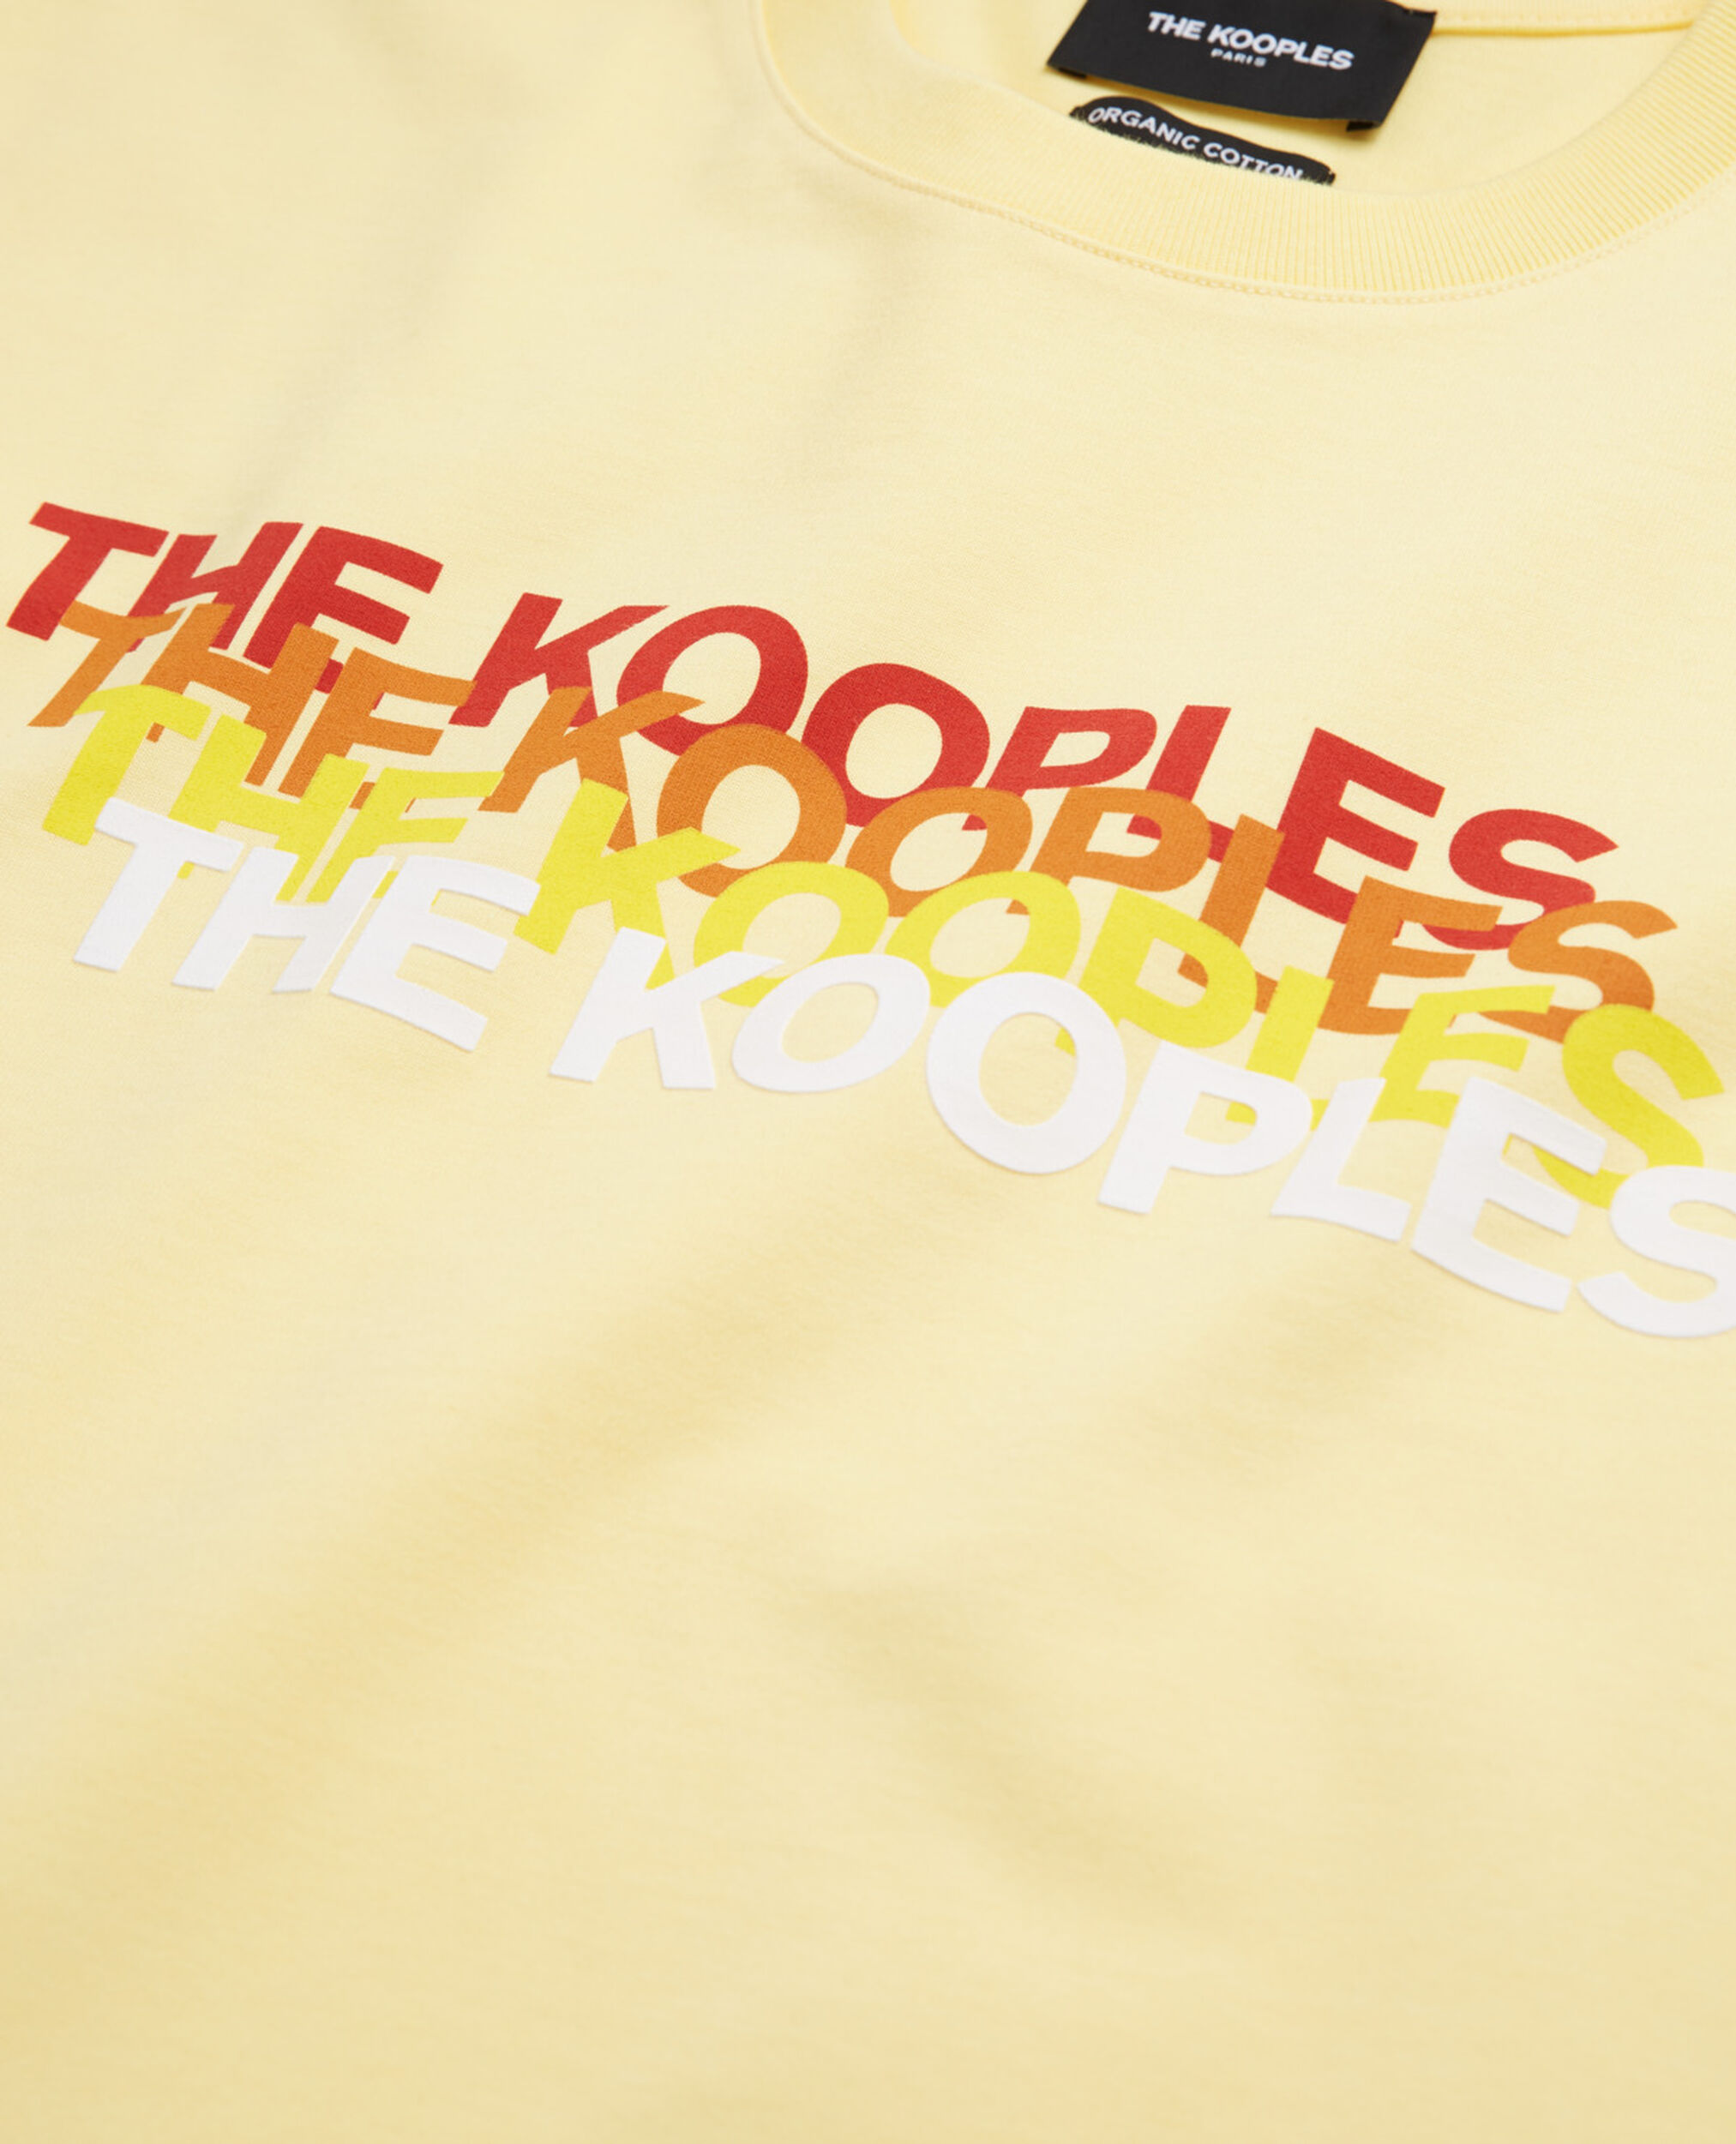 T-shirt jaune coton triple logo The Kooples, YELLOW, hi-res image number null